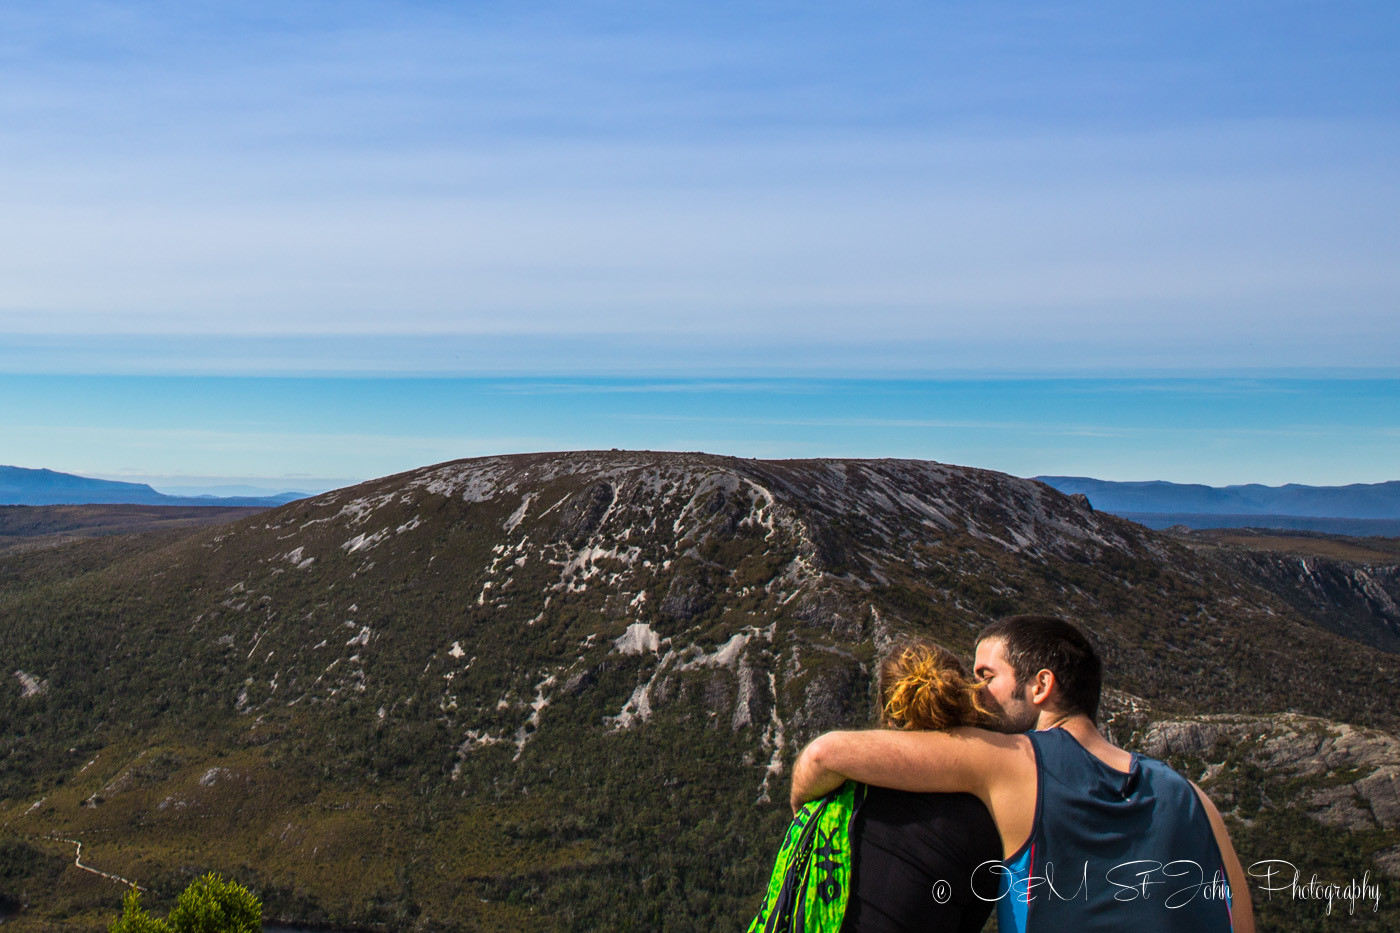 Max and Oksana at the Cradle Mountain National Park. Tasmania. Australia